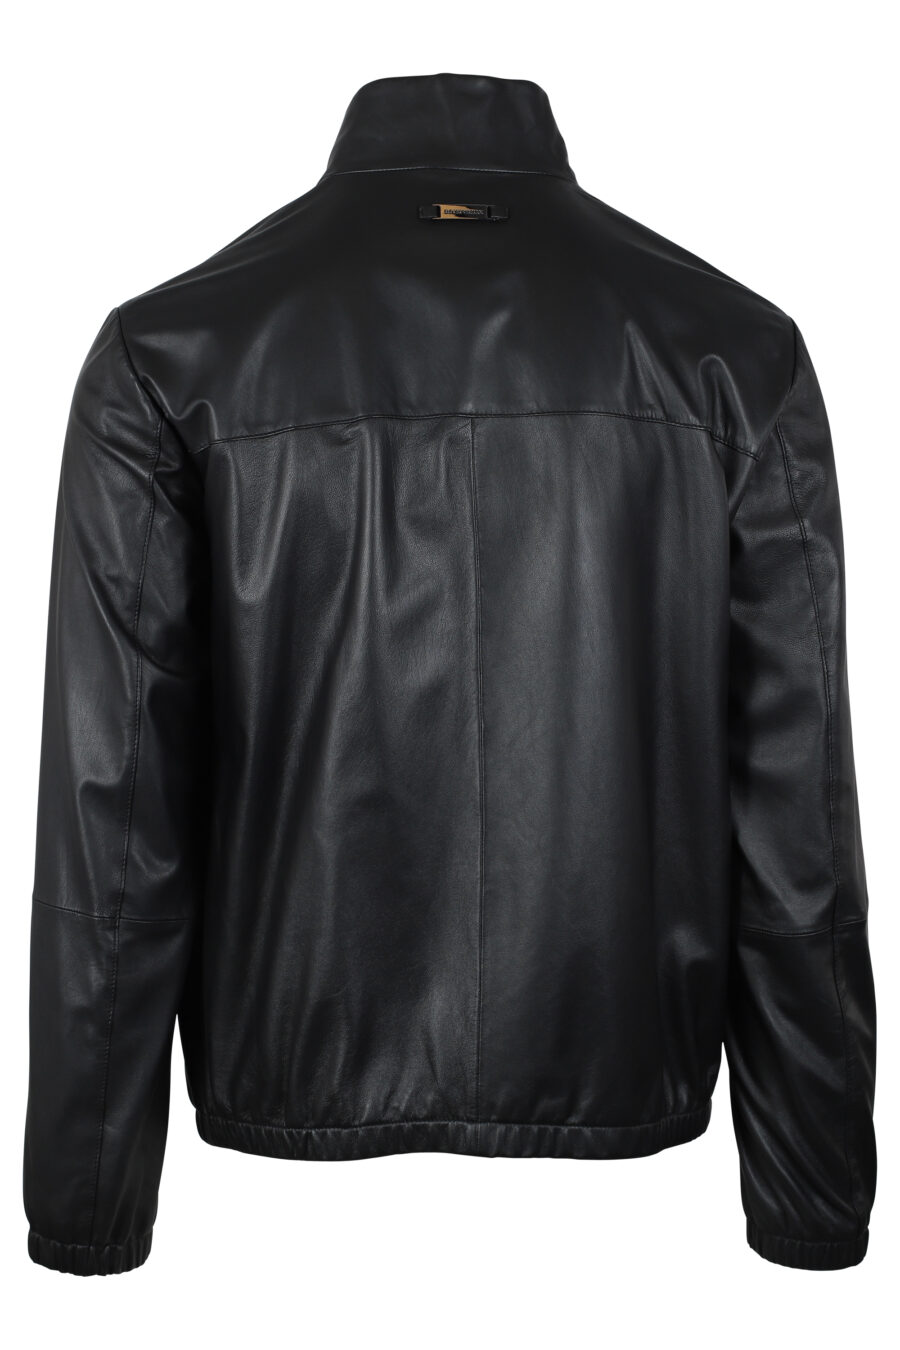 Casaco de couro preto com mini-logotipo - IMG 4657